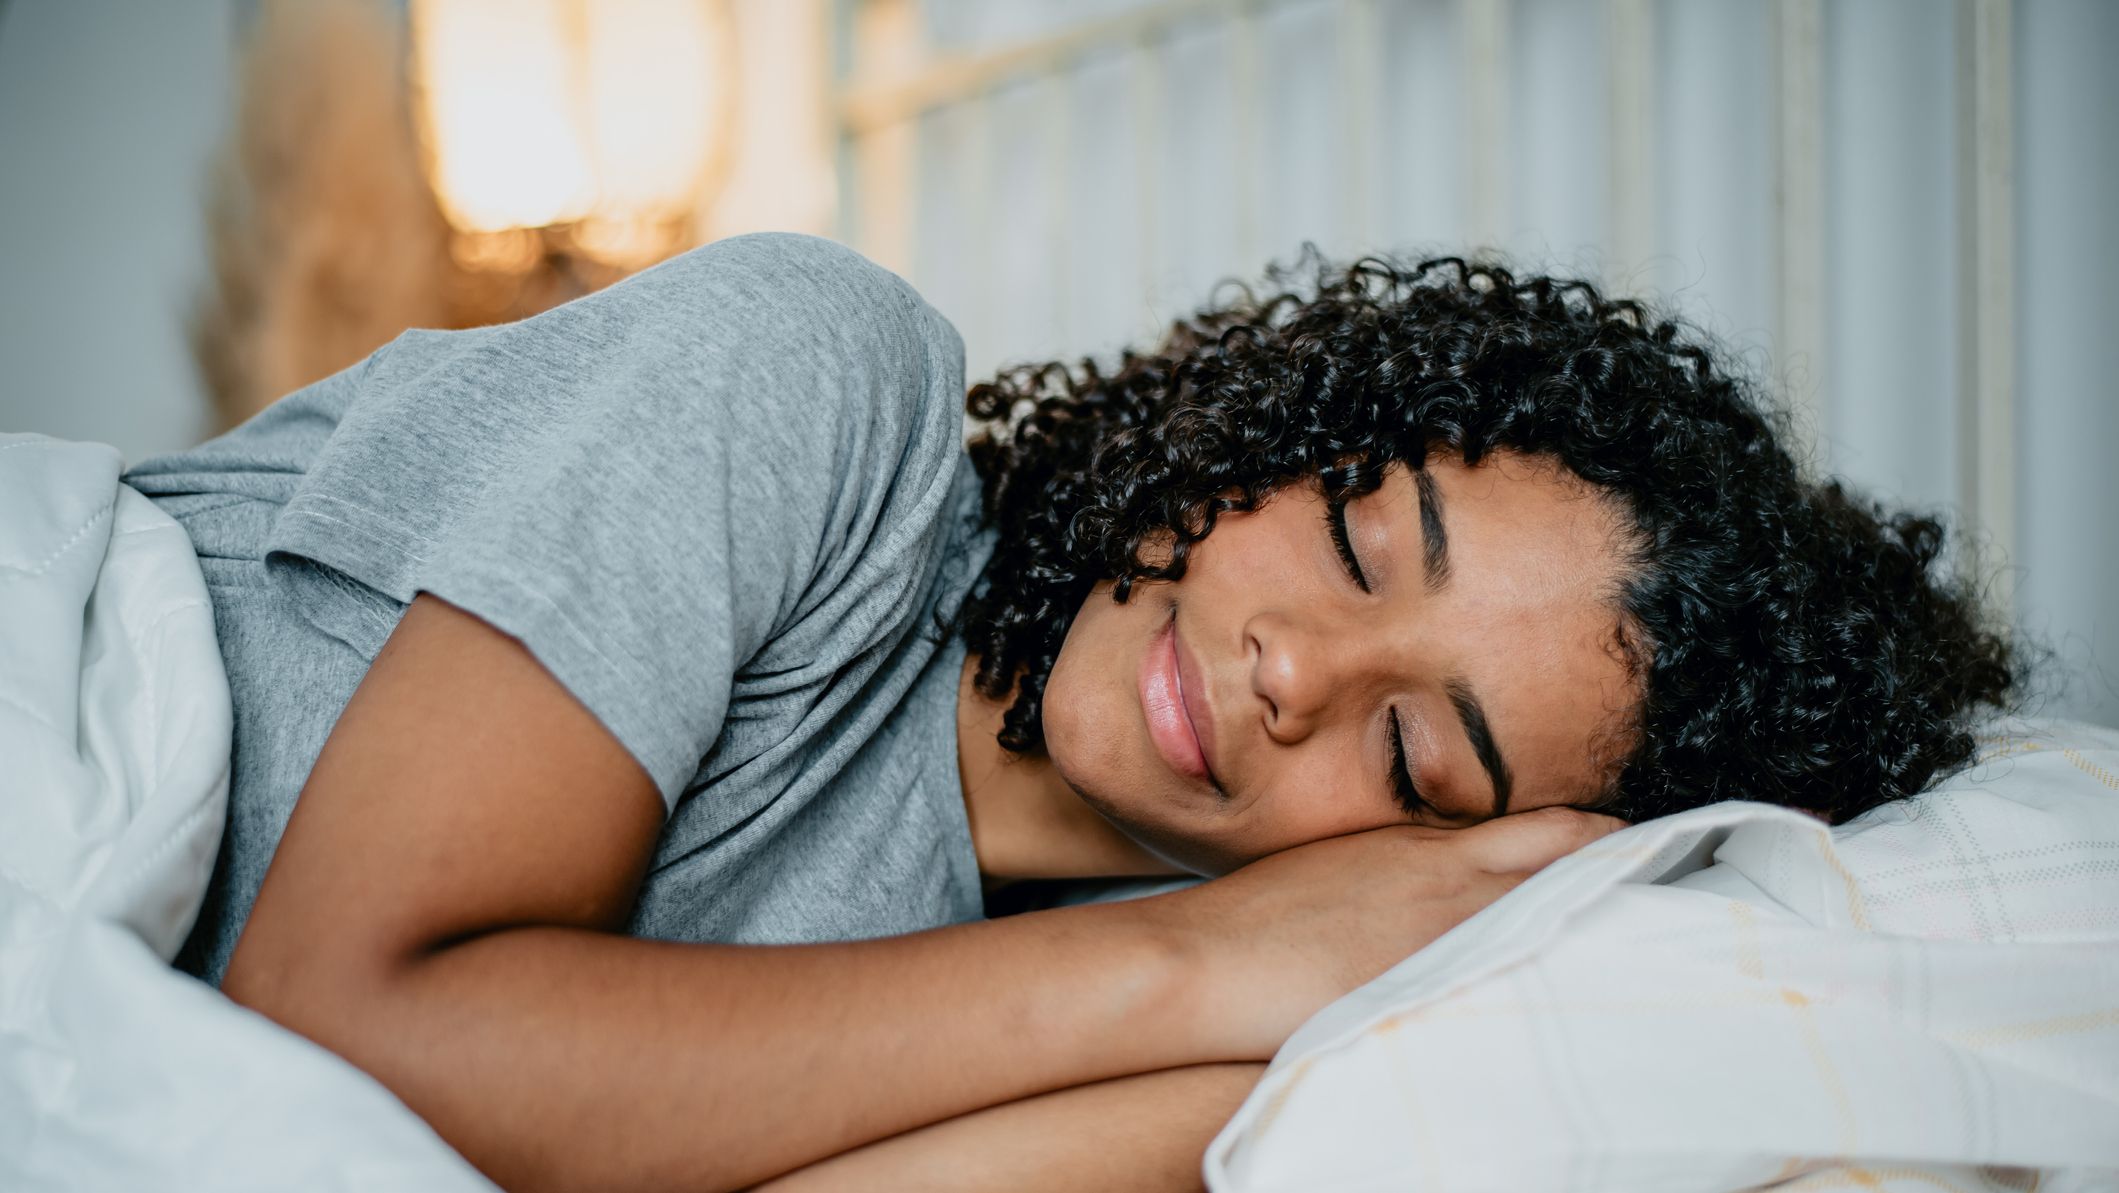 Asleep benefits emotional control